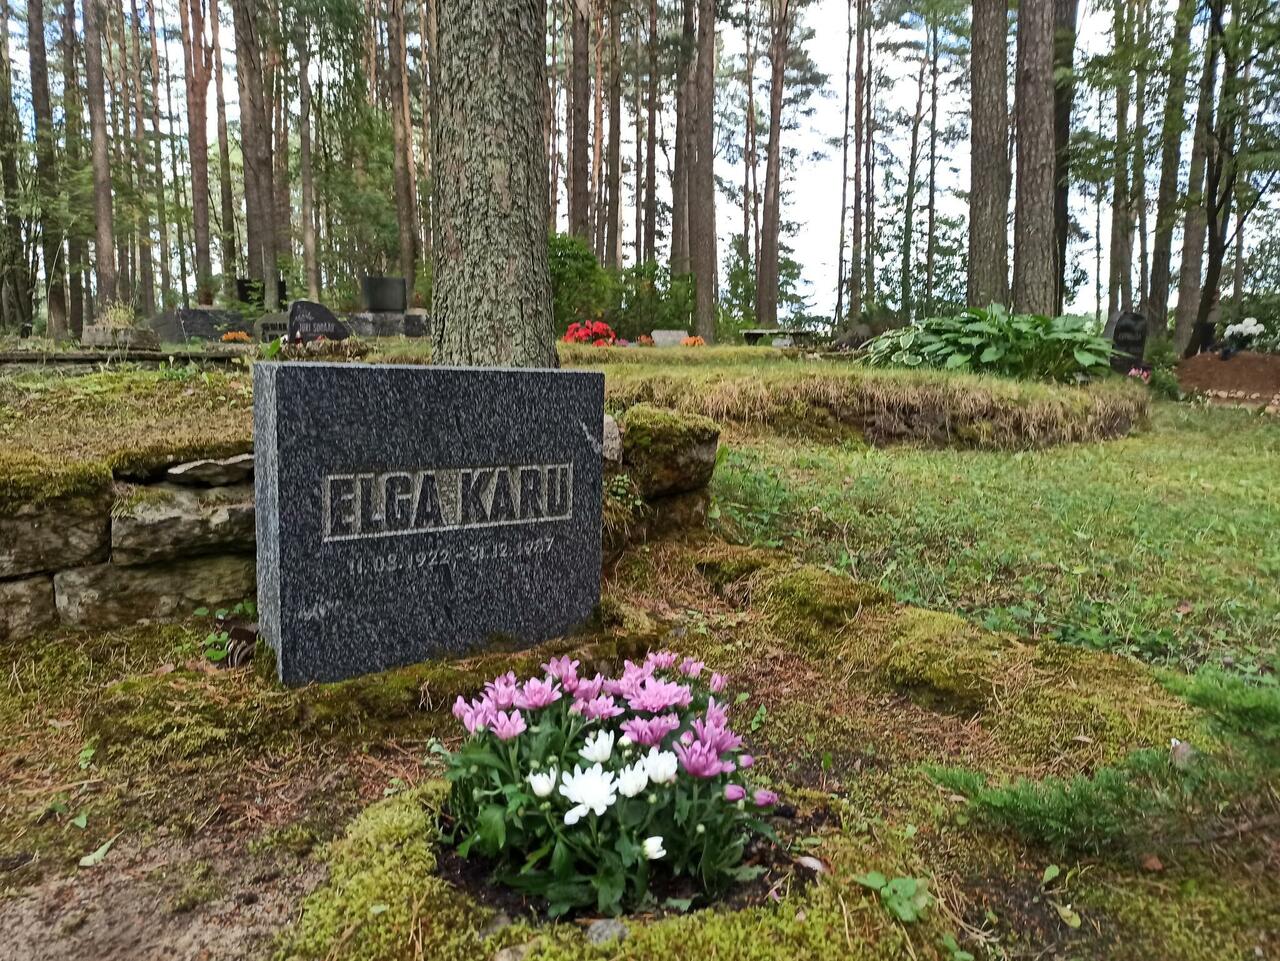 Grave of Elga Karu (1922-1987) at Pärname cemetry, Tallinn/Estonia.